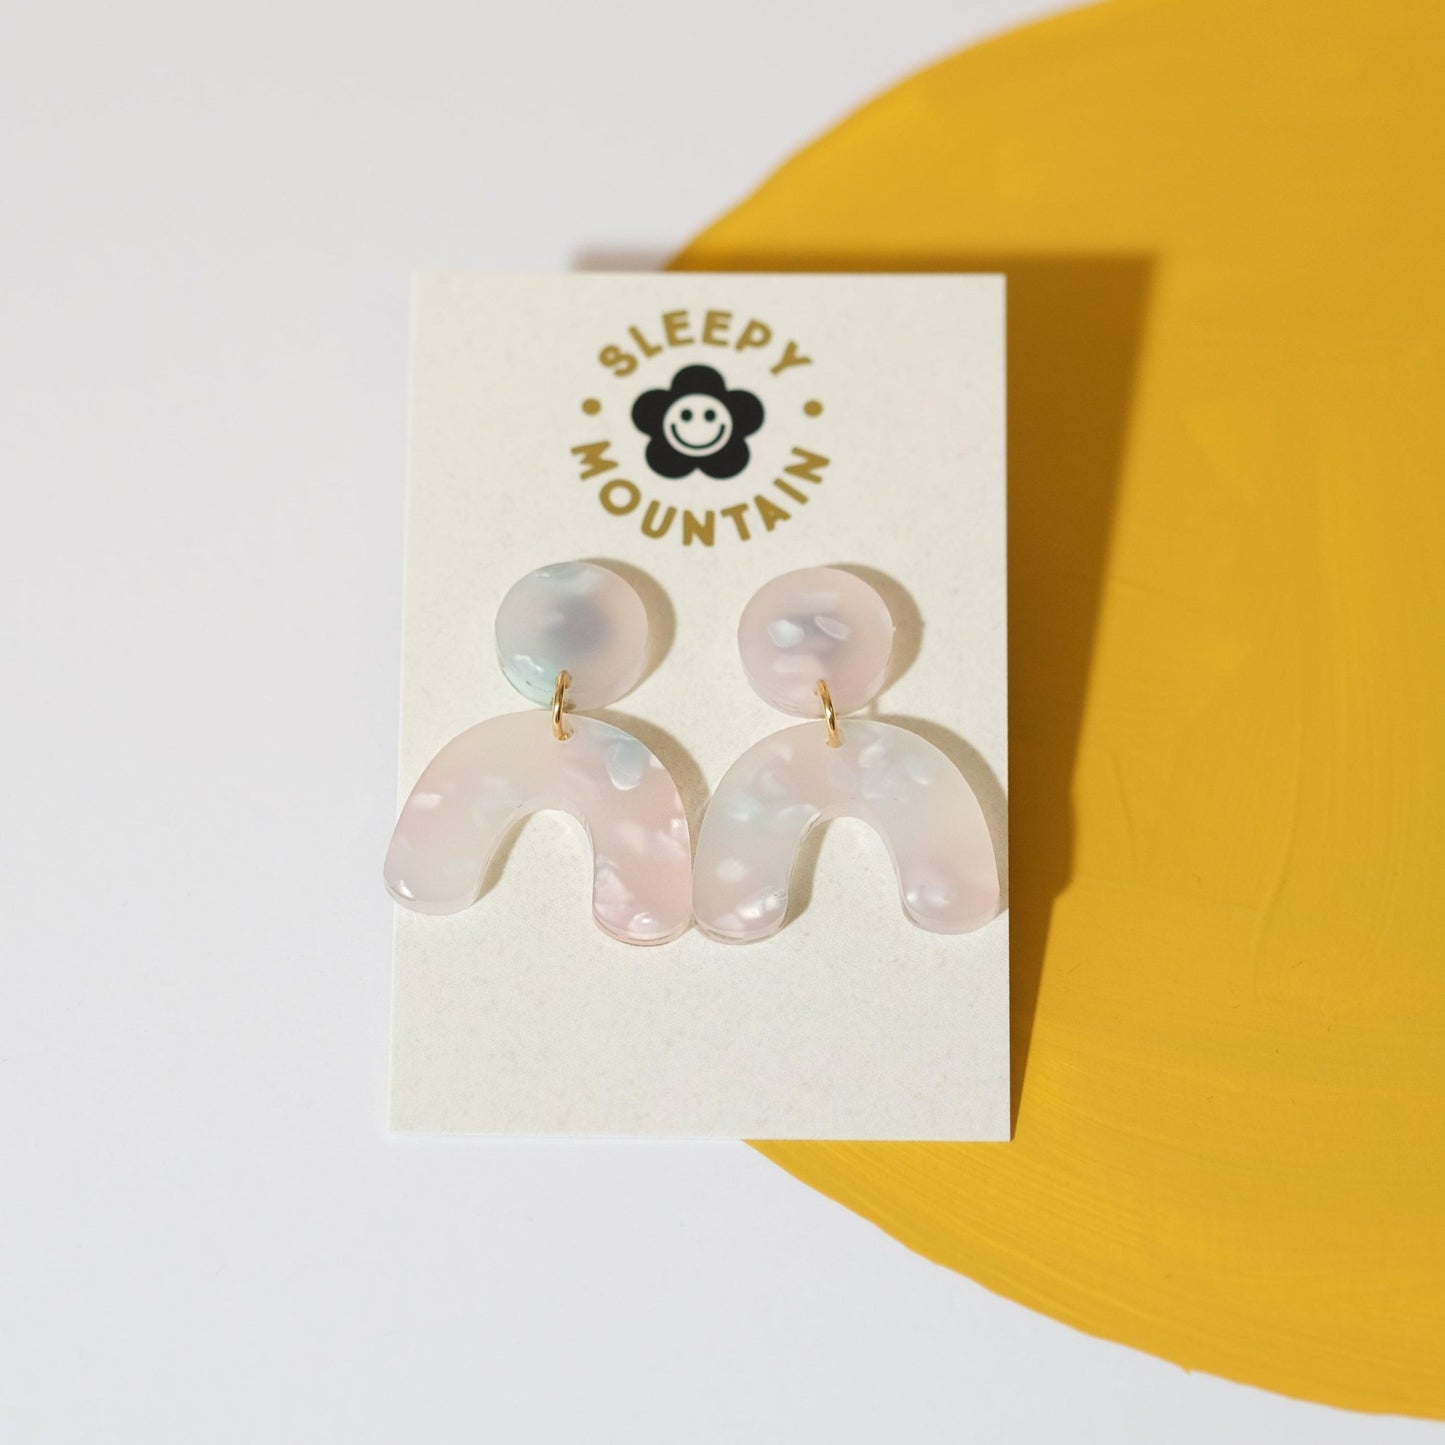 Mini Arch Earrings Petals Collection - Cotton Candy - Sleepy Mountain